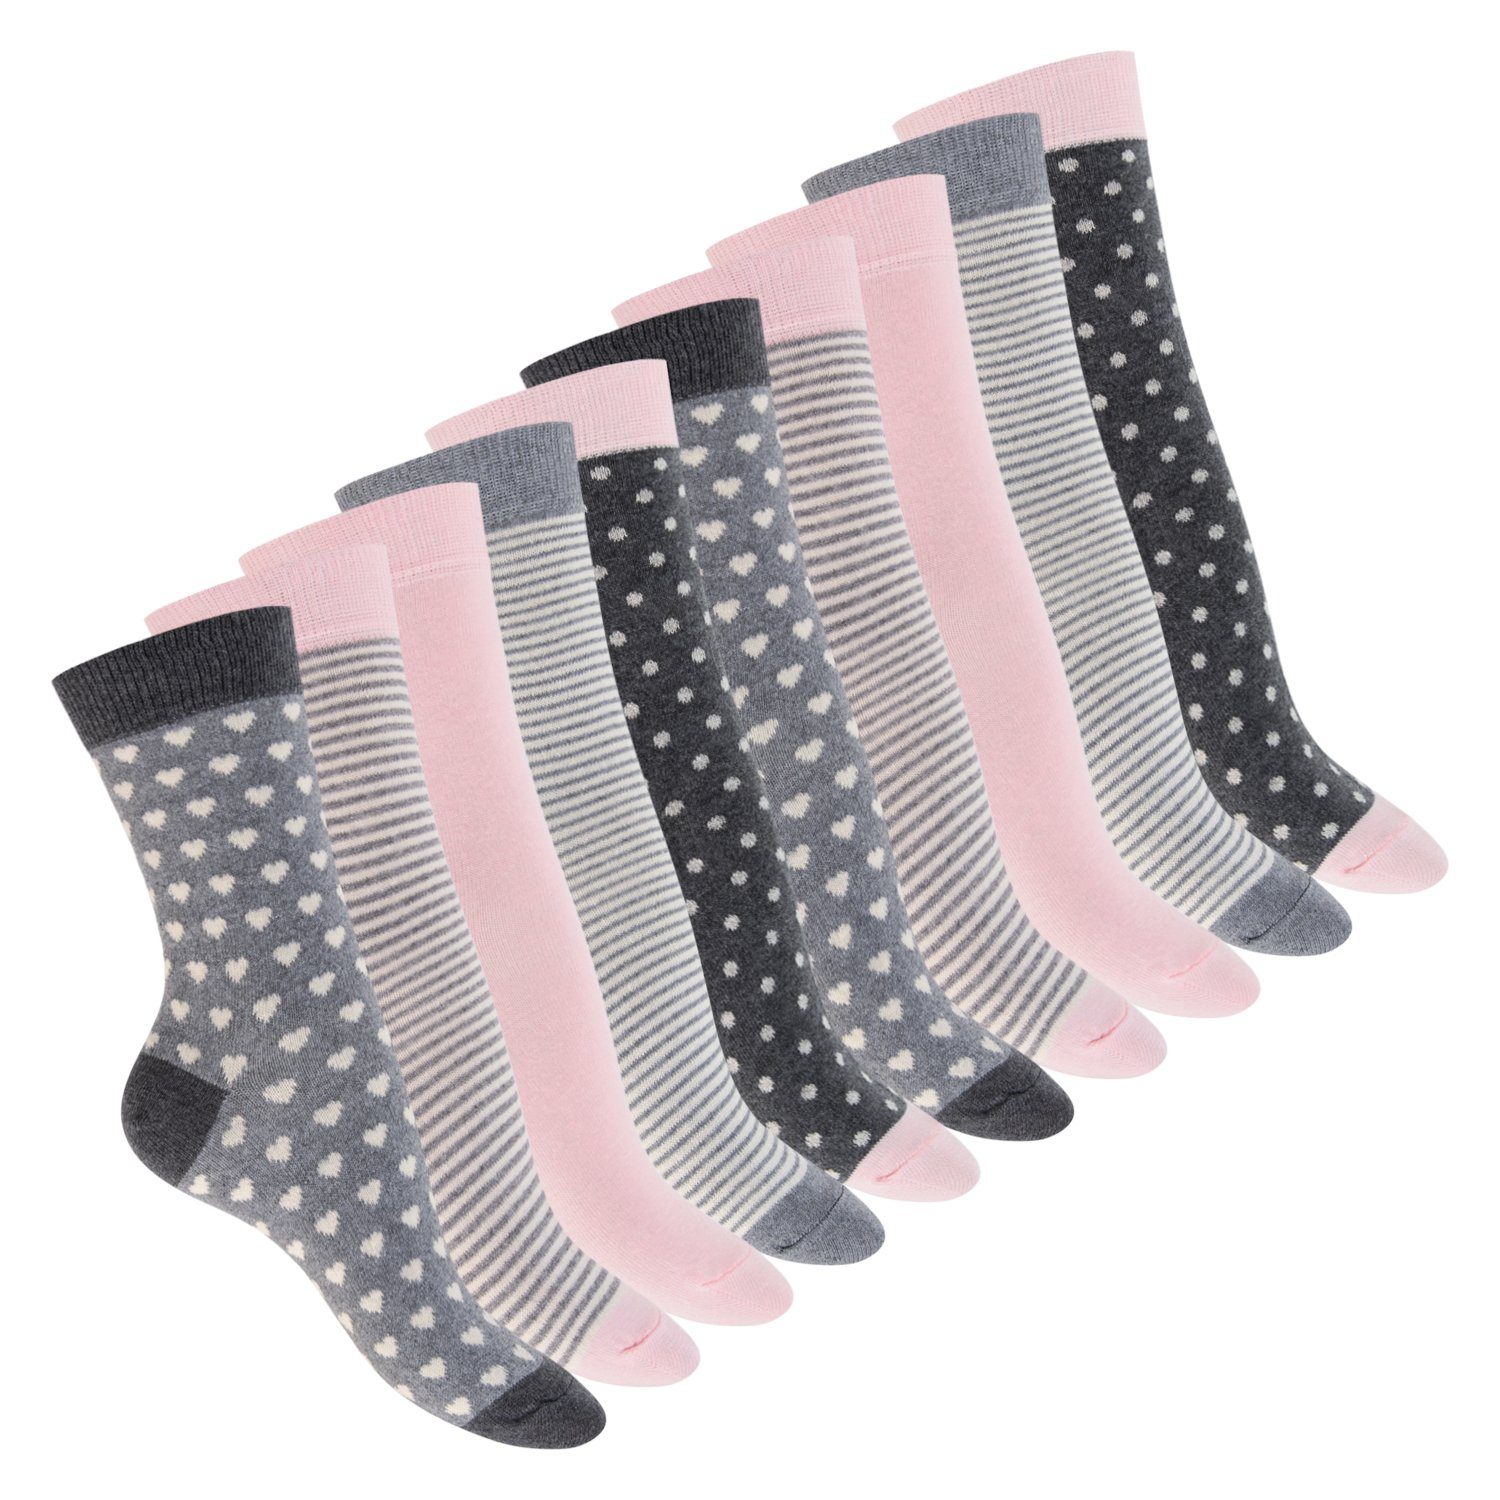 celodoro Basicsocken Süße Motiv mit Mix regenerative Damen Eco Baumwolle Pastell Socken (10 Paar)